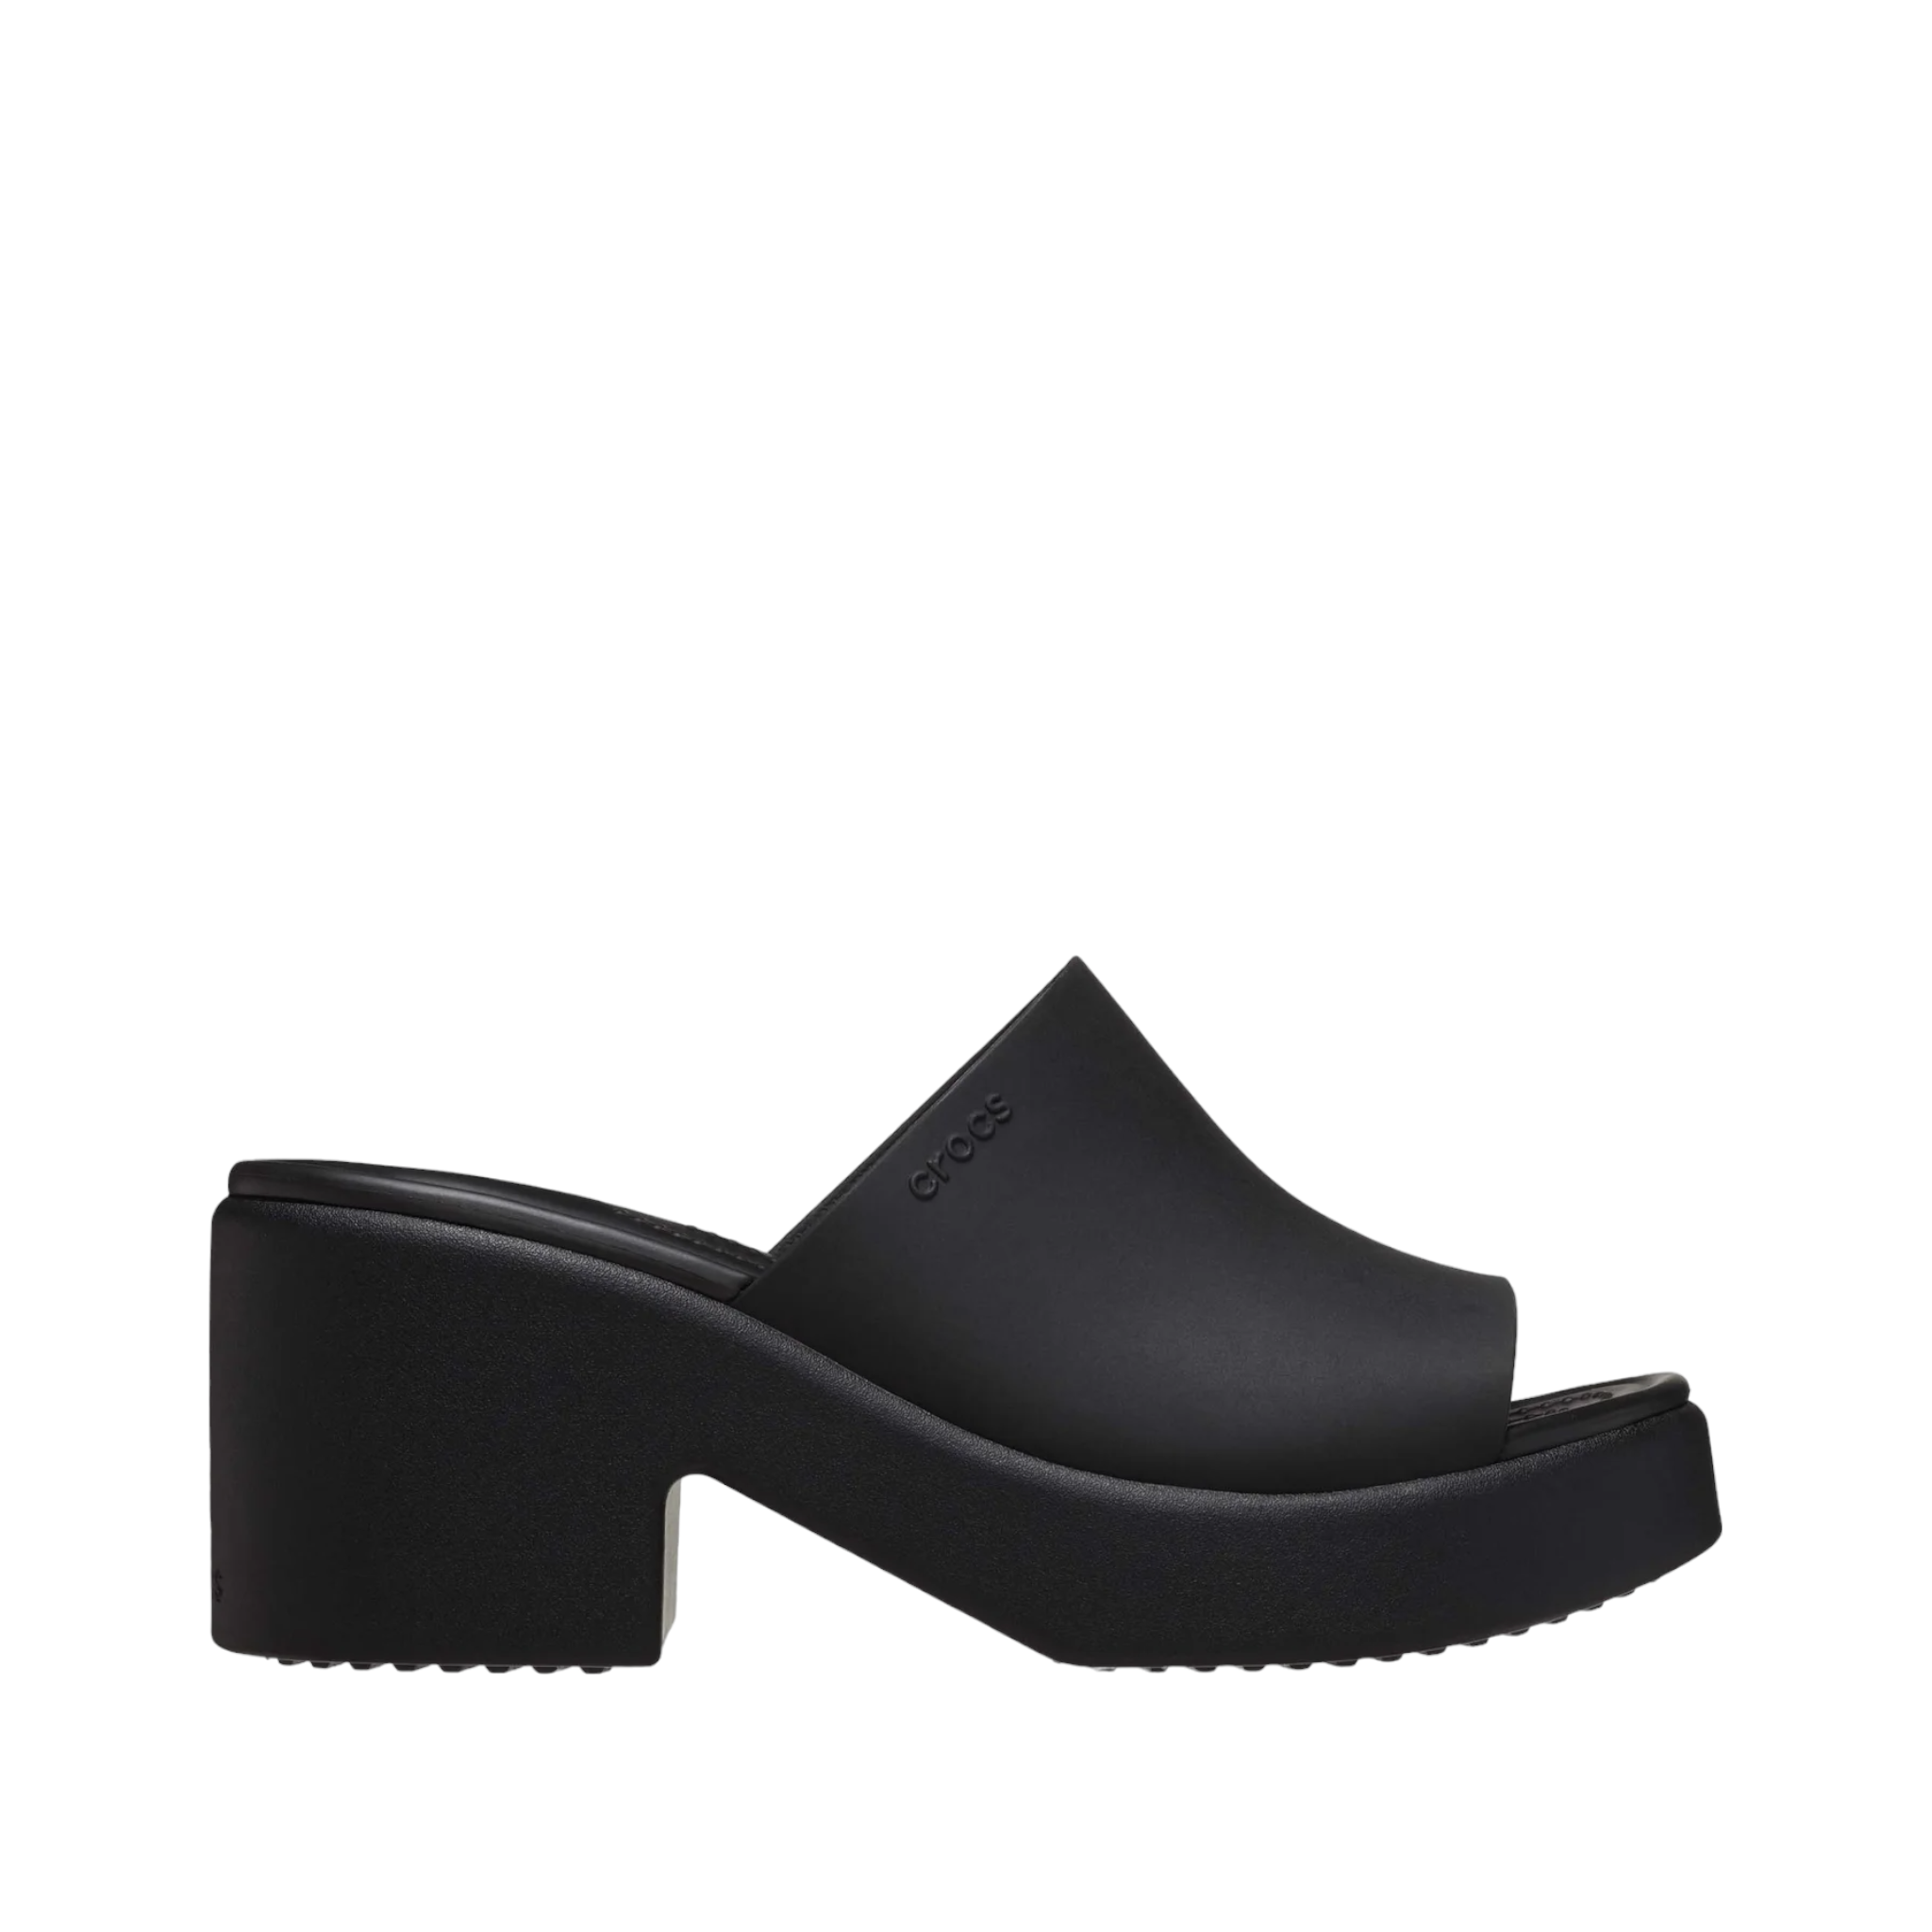 Brooklyn Slide Heel - shoe&amp;me - Crocs - Heel - Platform, Sandal, Summer, Womens